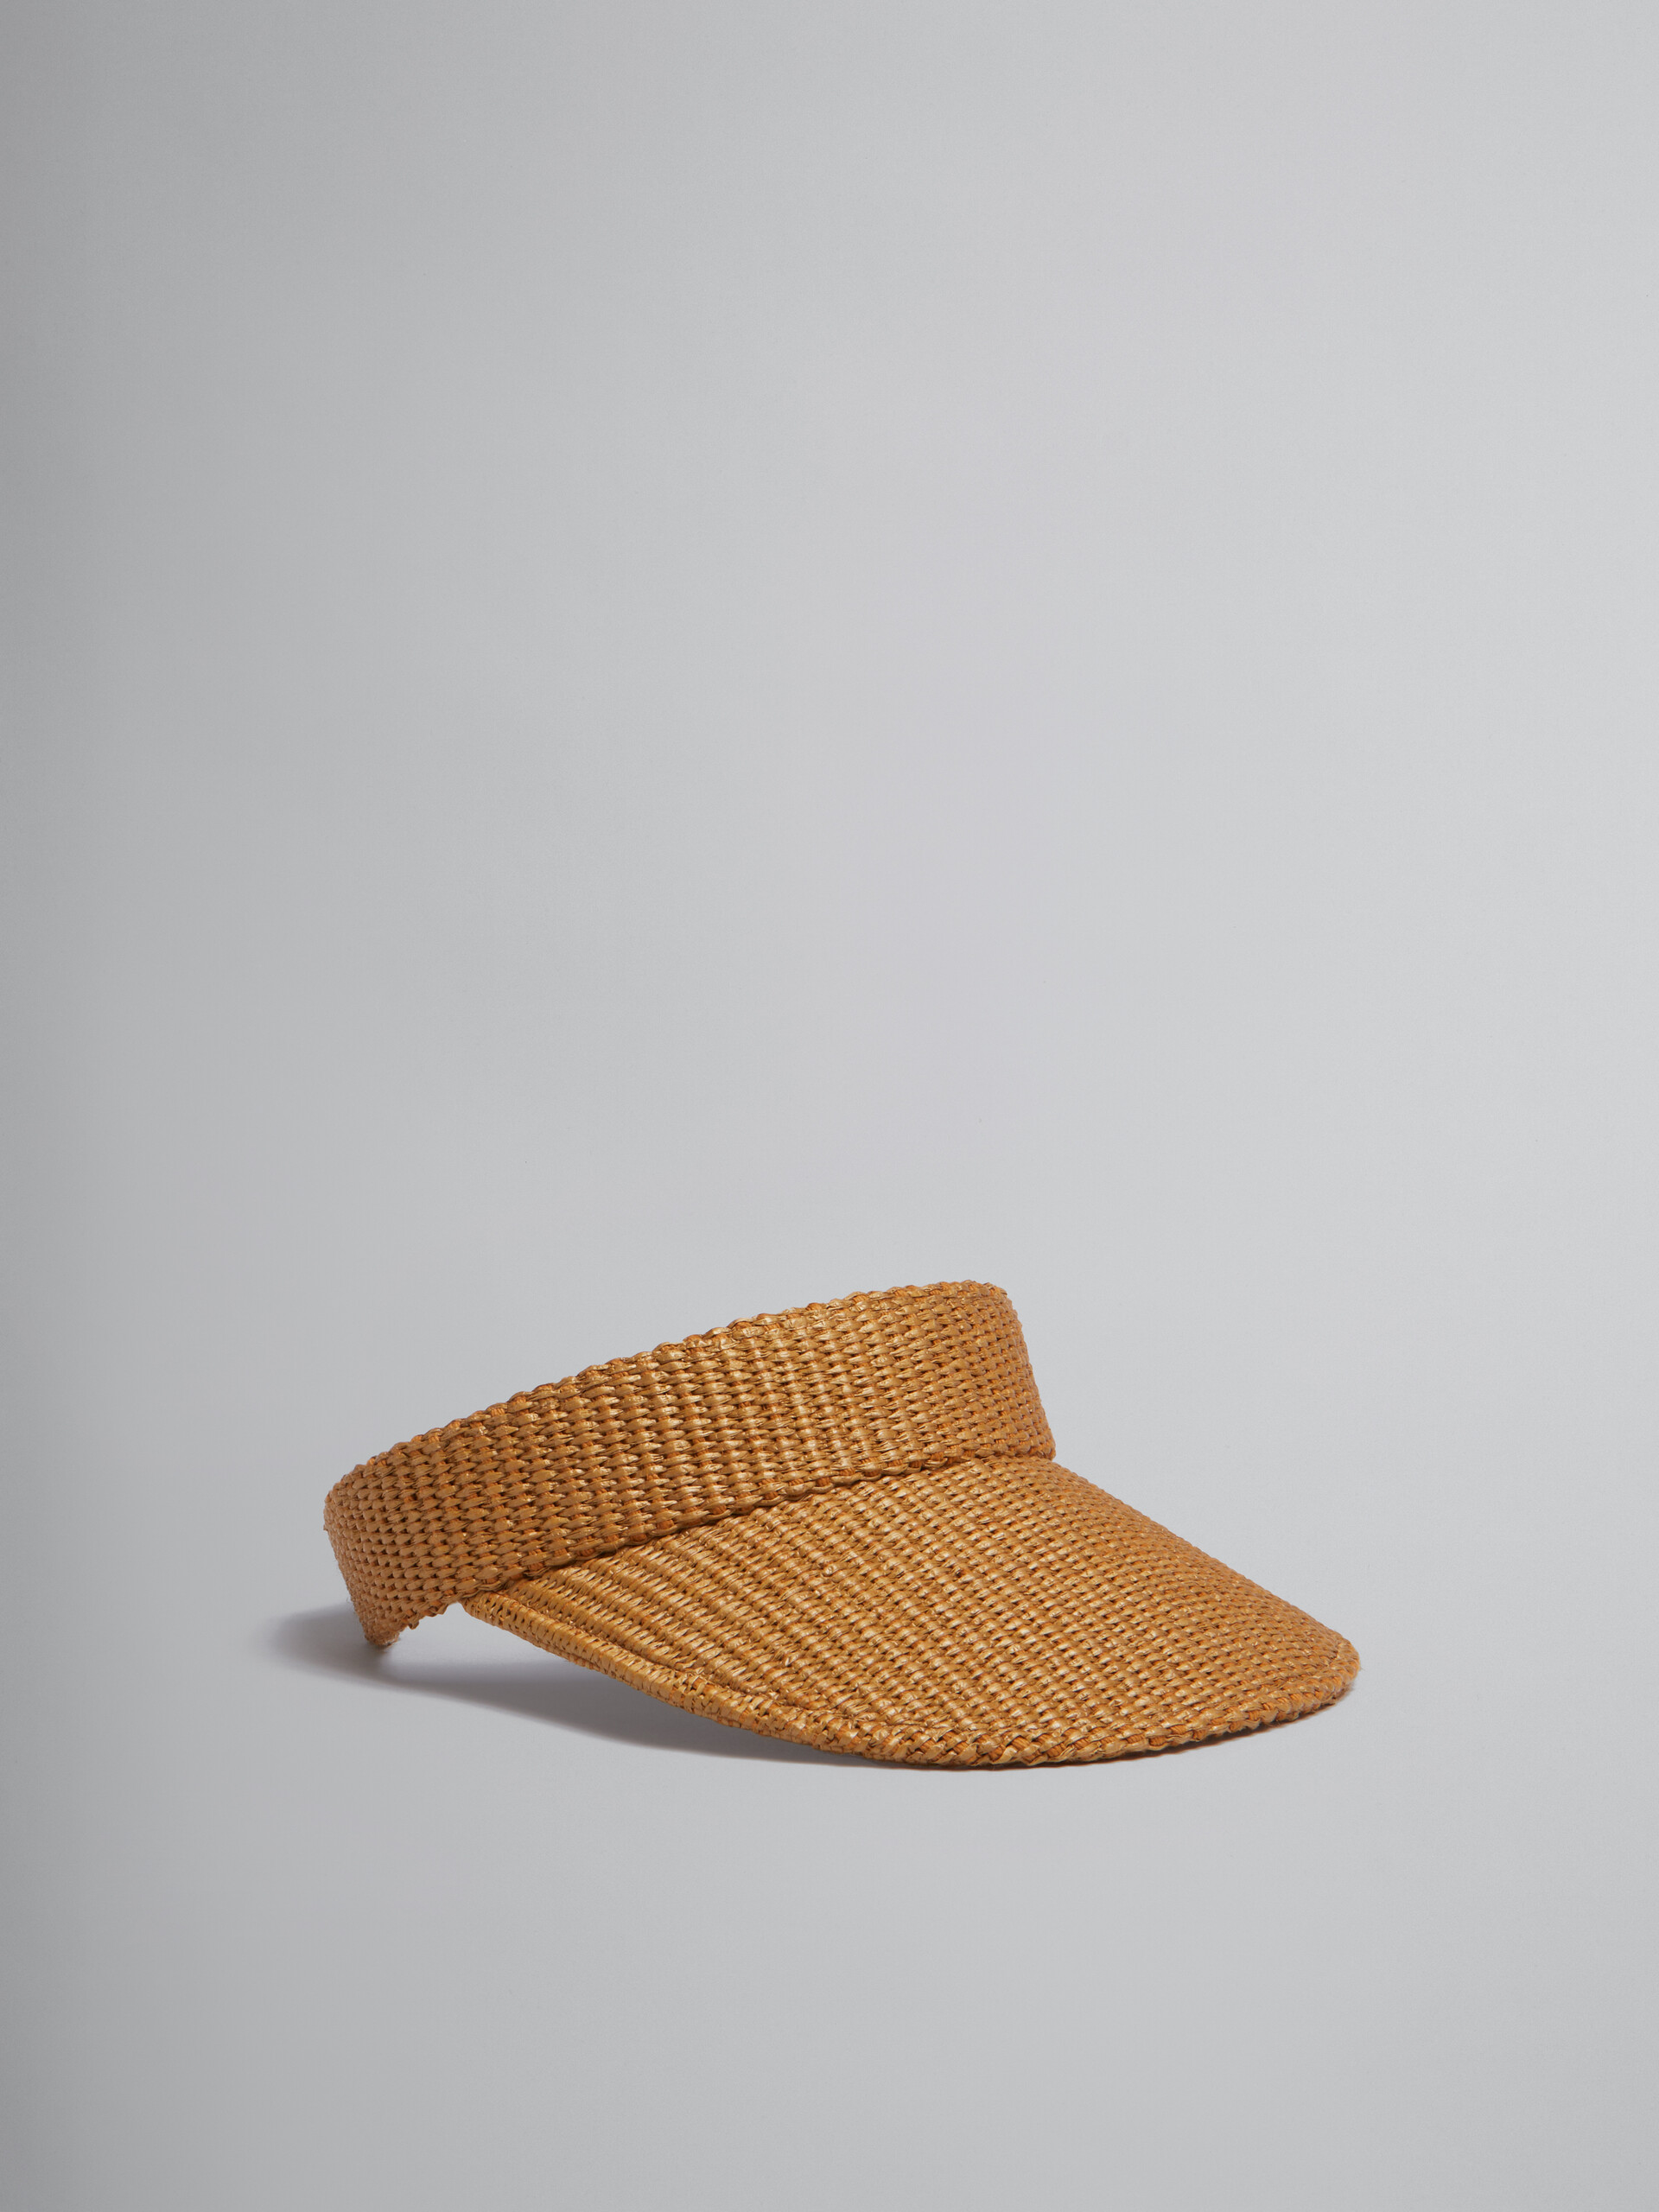 Marni x No Vacancy Inn - Caramel visor in raffia fabric - Hats - Image 1